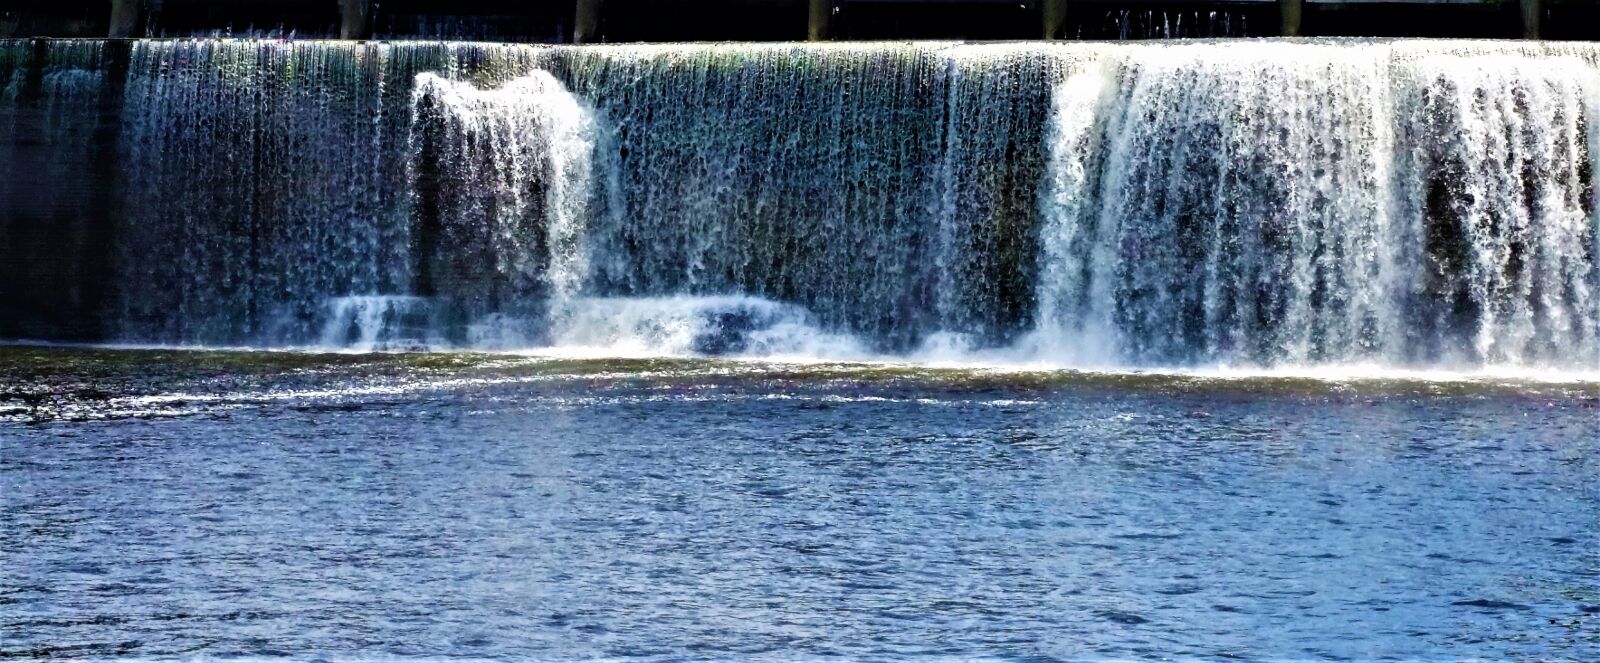 Samsung Galaxy S5 sample photo. Fall, water, nature photography